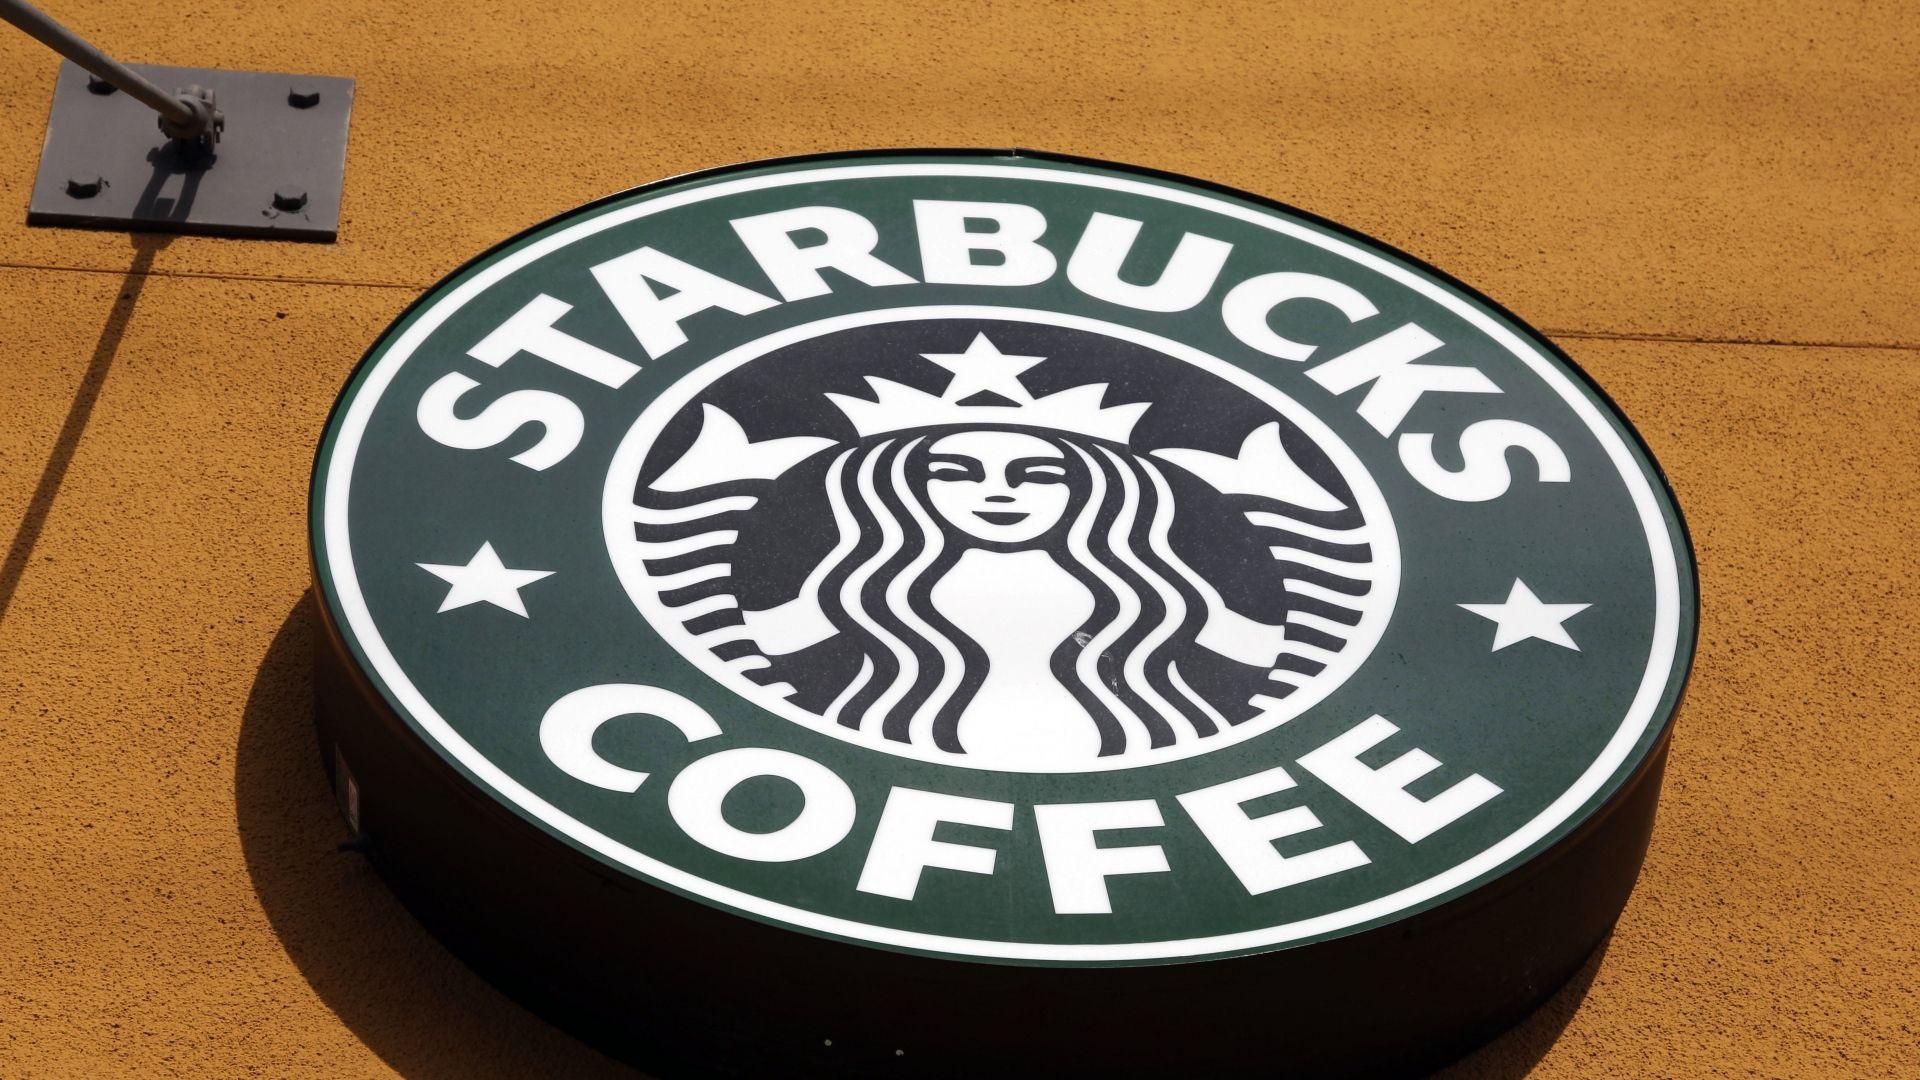 Starbucks Coffee Sign Logo Desktop Wallpaper 61868 1920x1080 px